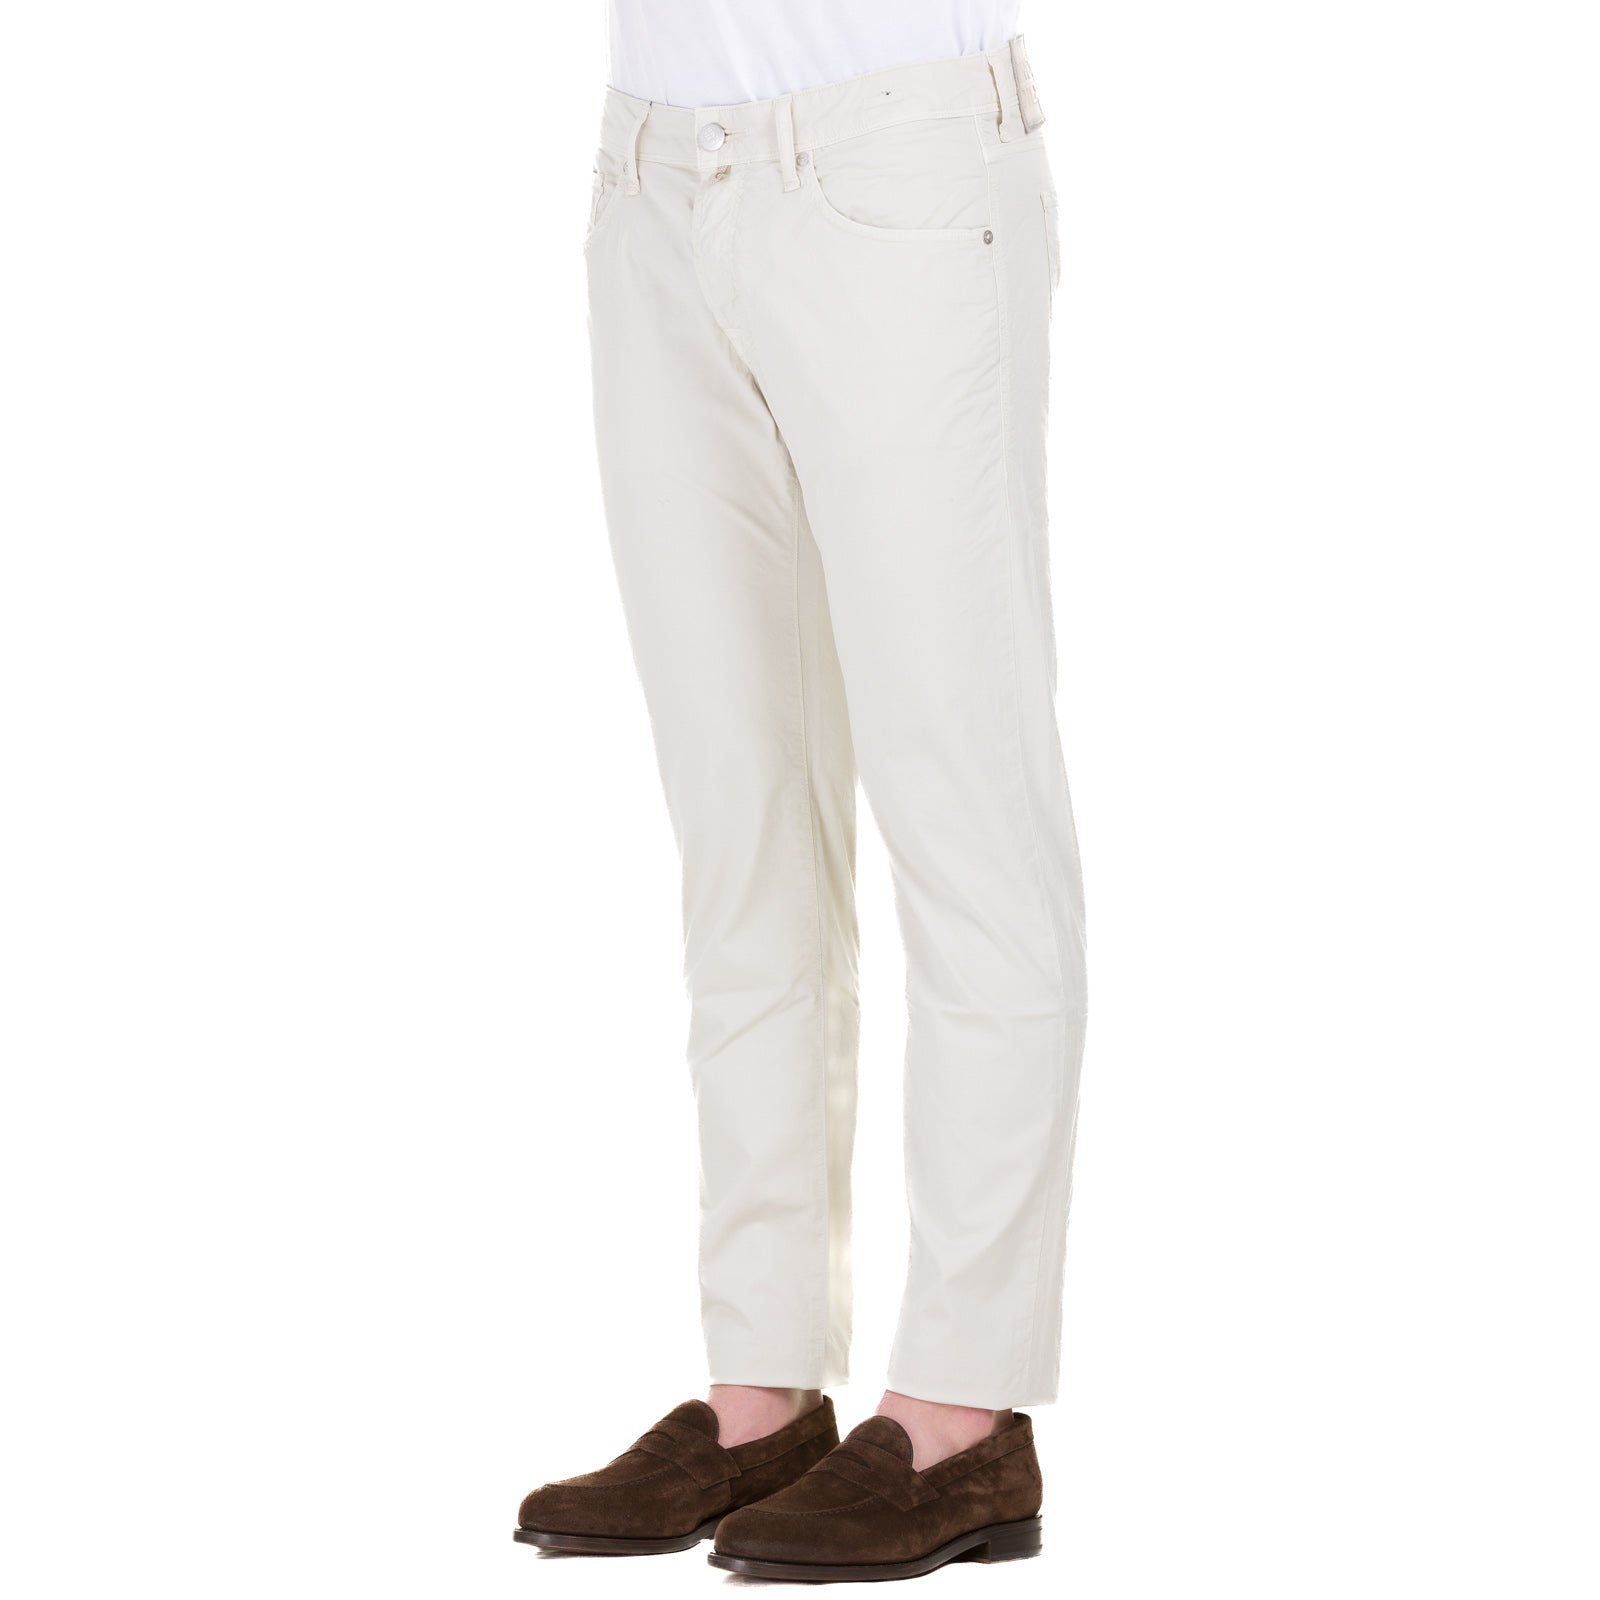 Pantalone INCOTEX 114 BDPS0002-06510 Bianco sporco - Avant-gardeandria